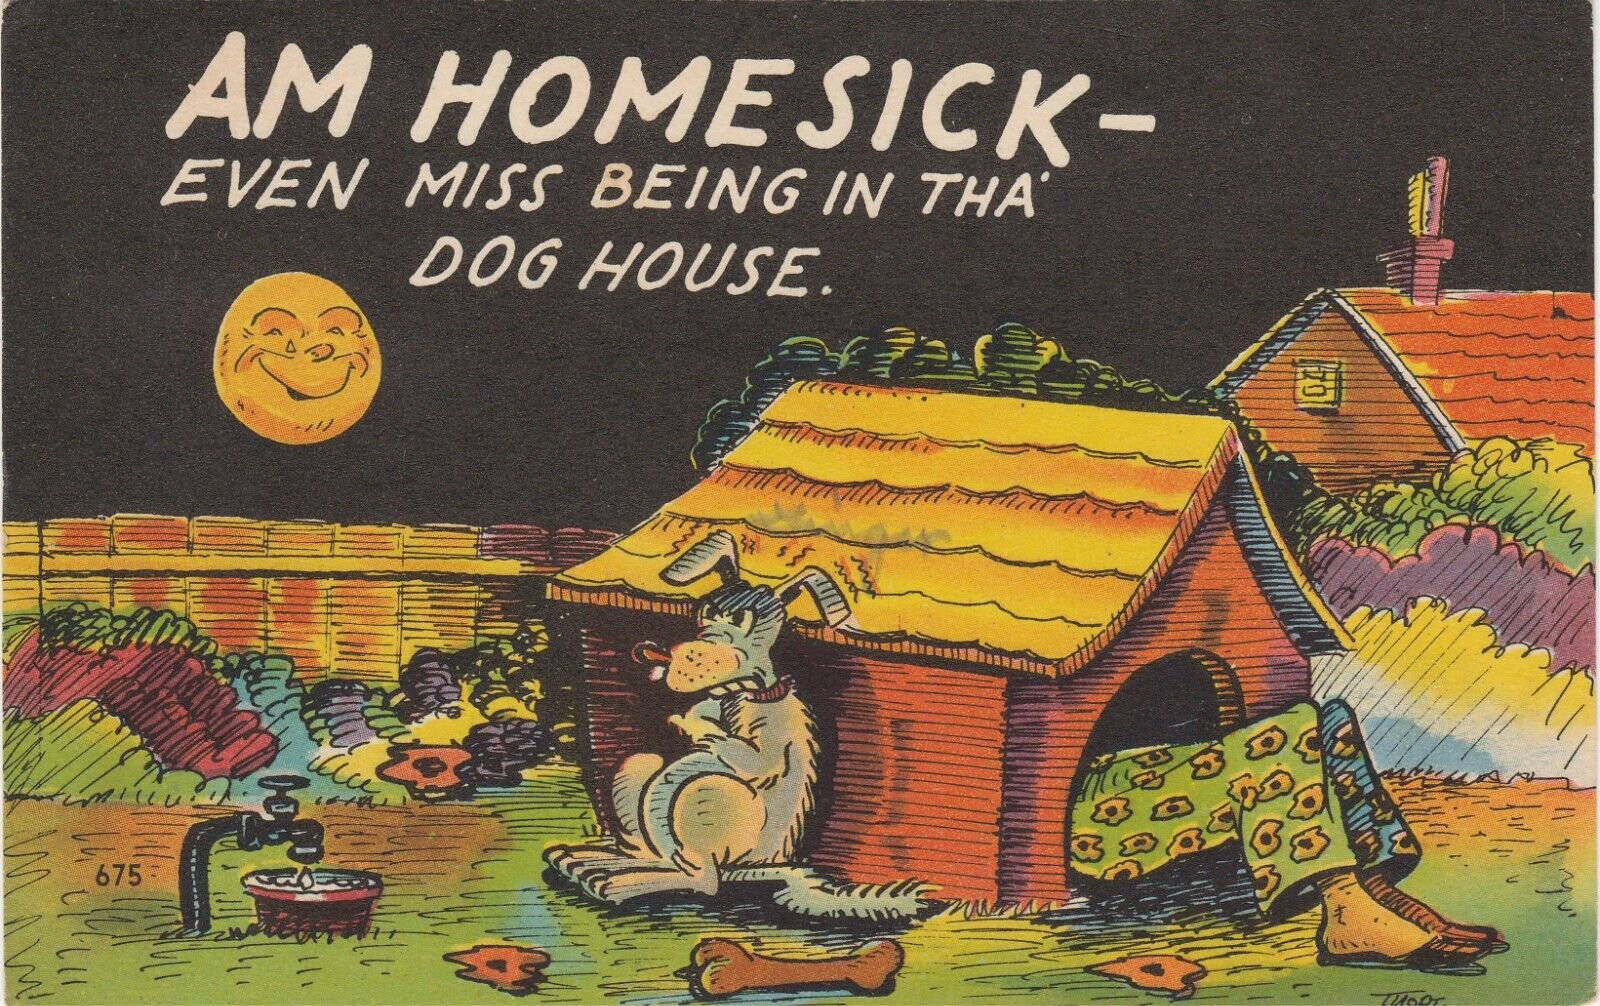 Vintage Am Homesick Humor Postcard Doghouse Bone Comic Artist Tuort Night scene